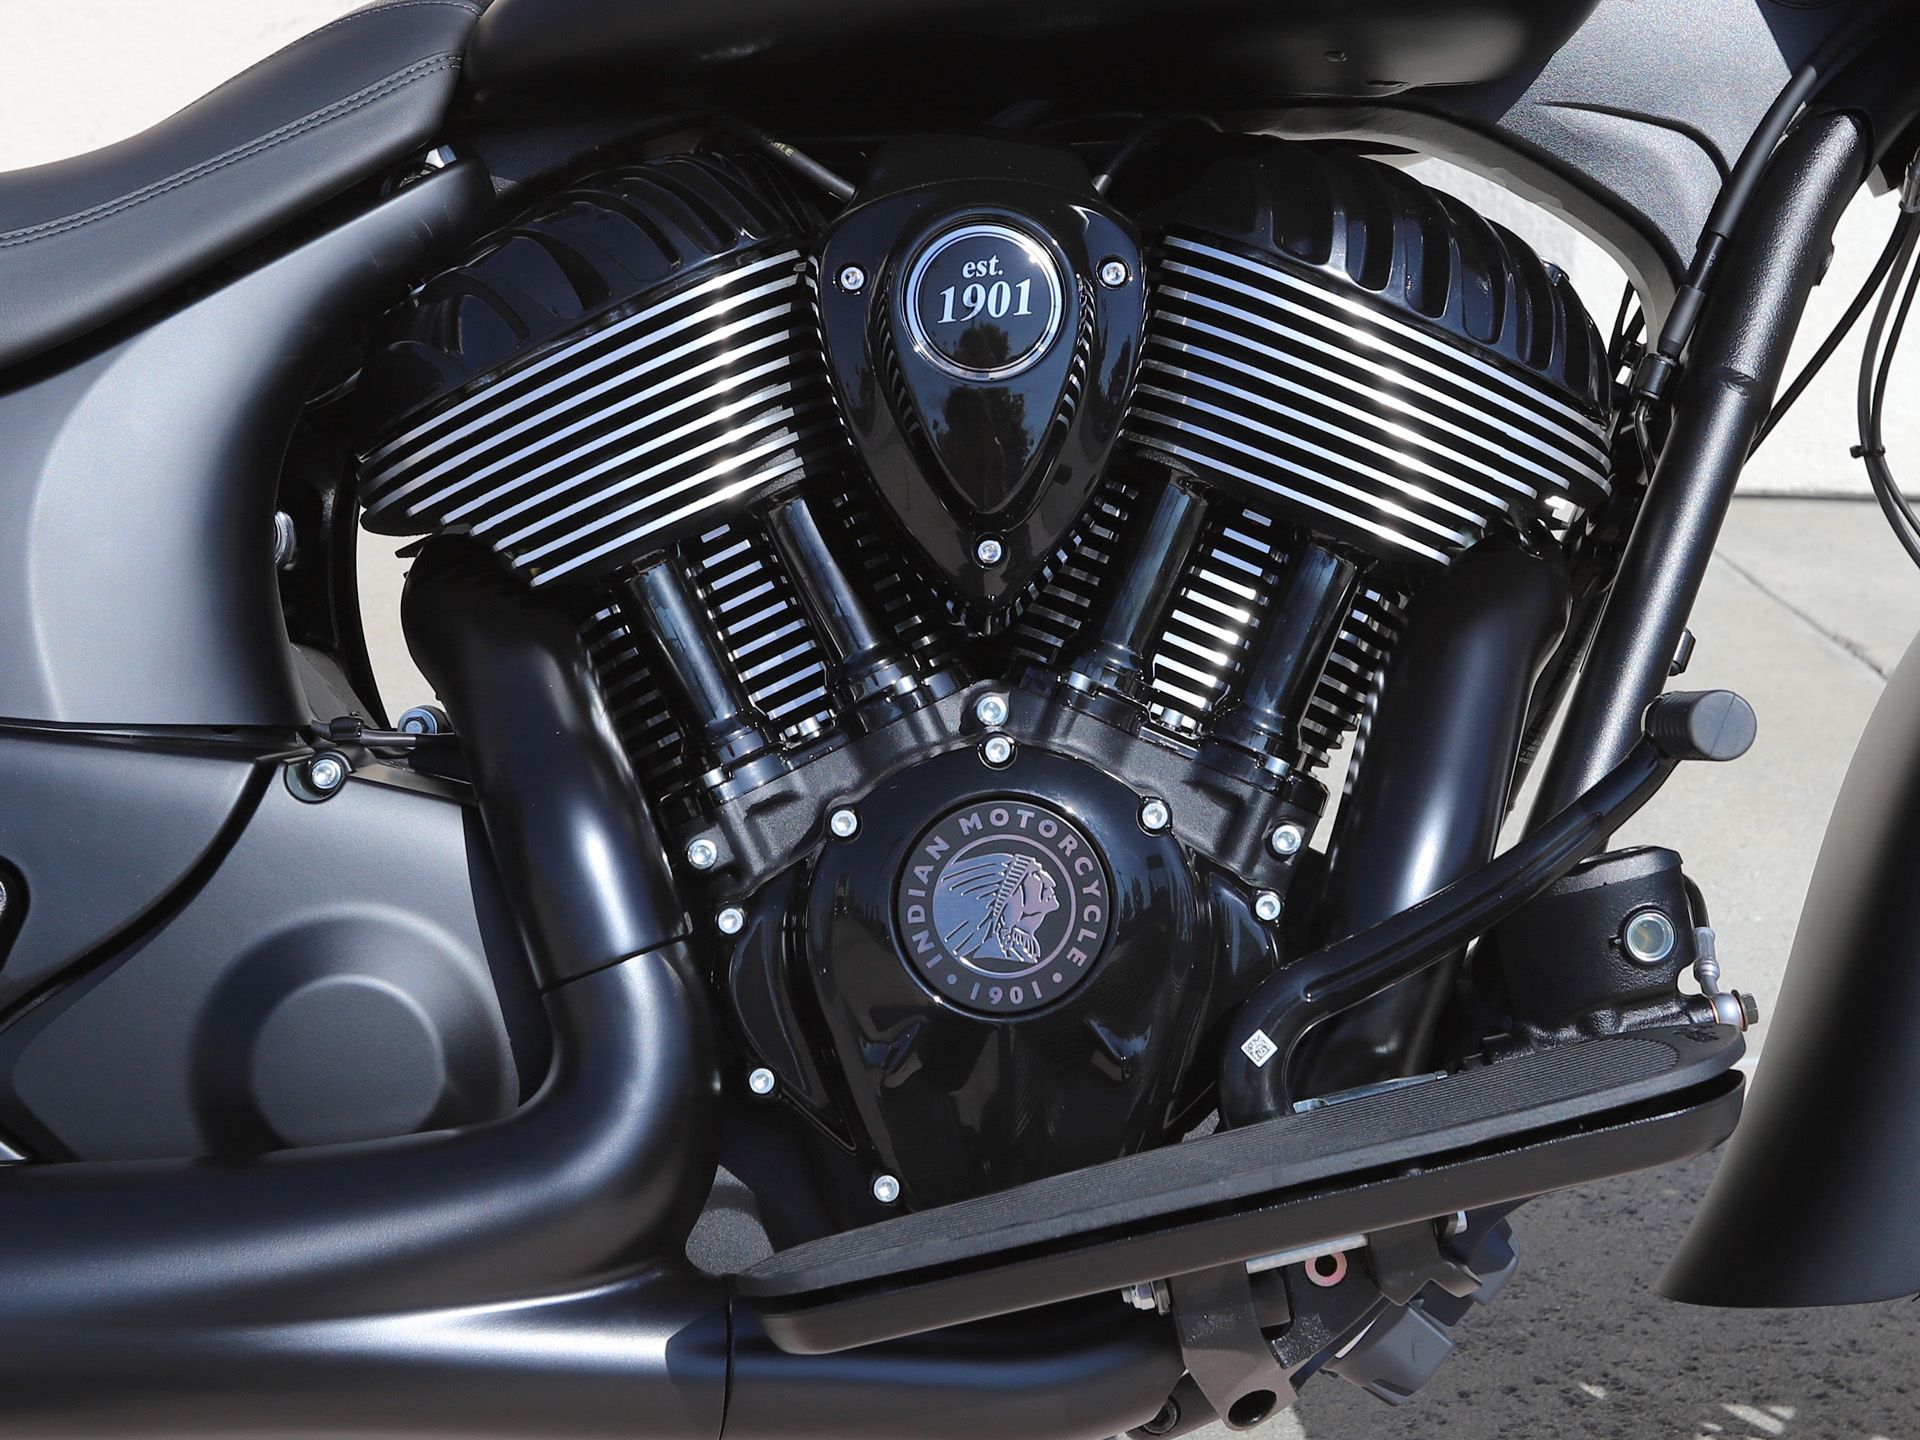 2022 Indian Motorcycle Springfield® Dark Horse® in EL Cajon, California - Photo 9